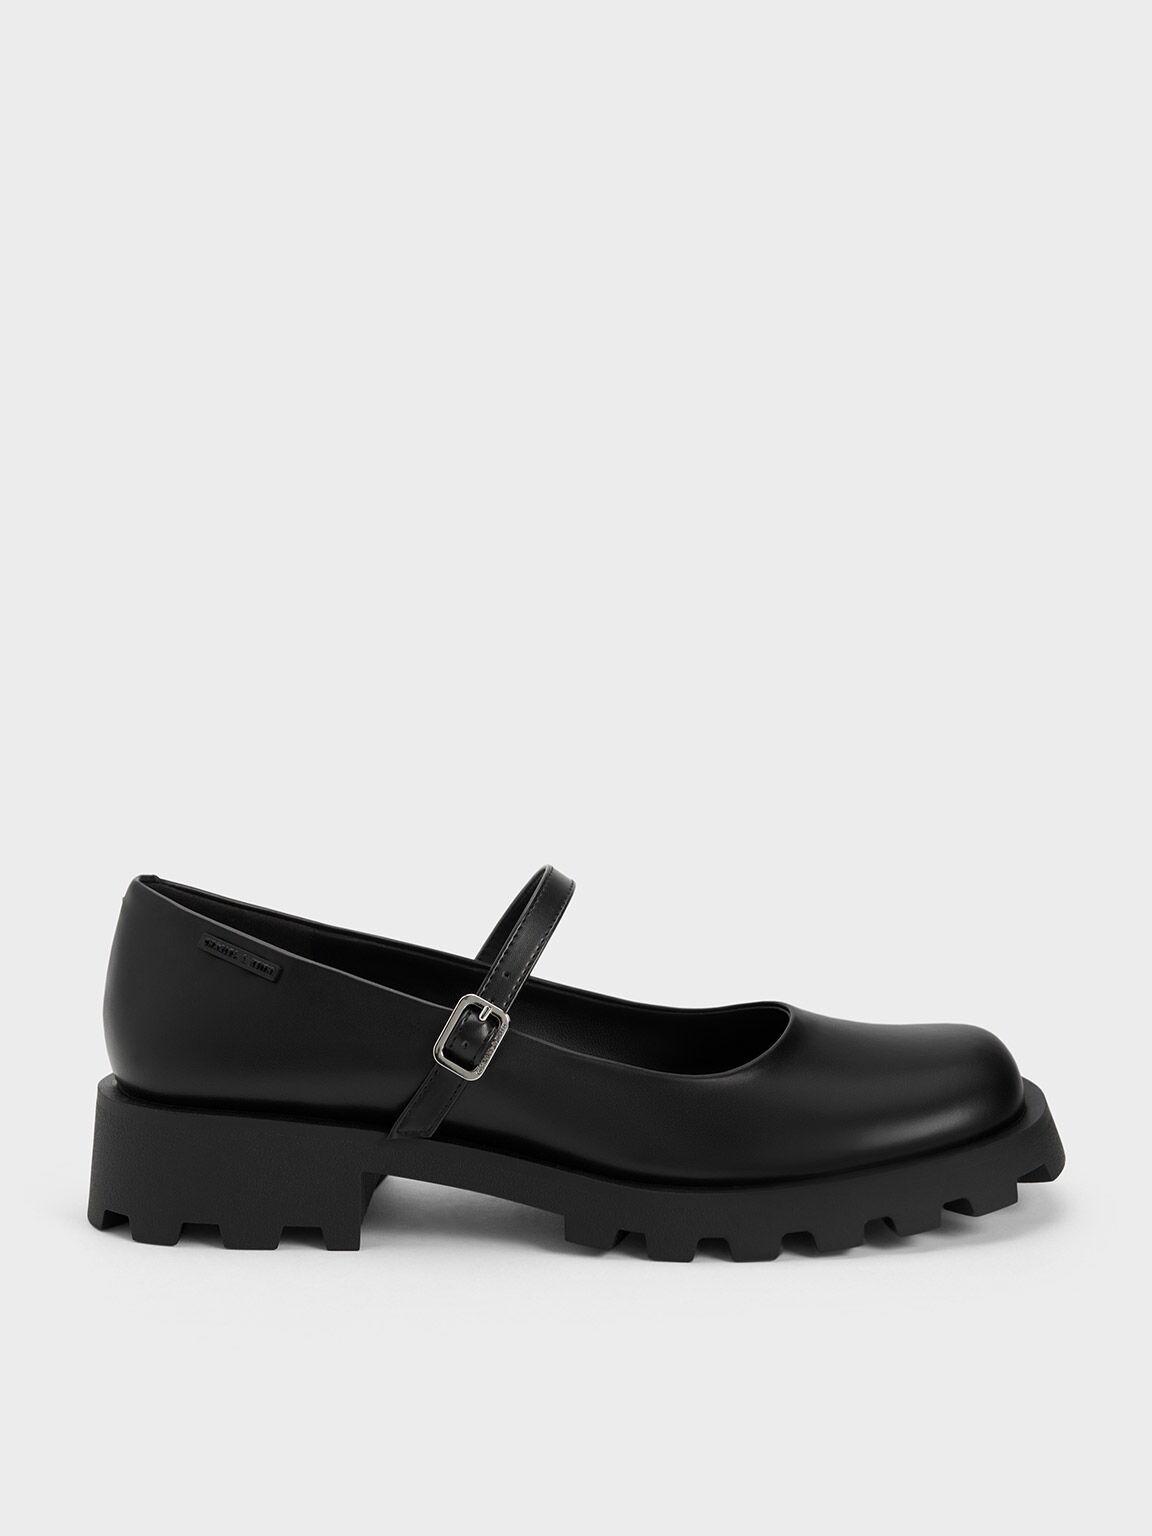 Sepatu Mary Janes Rounded Square-Toe, Black, hi-res